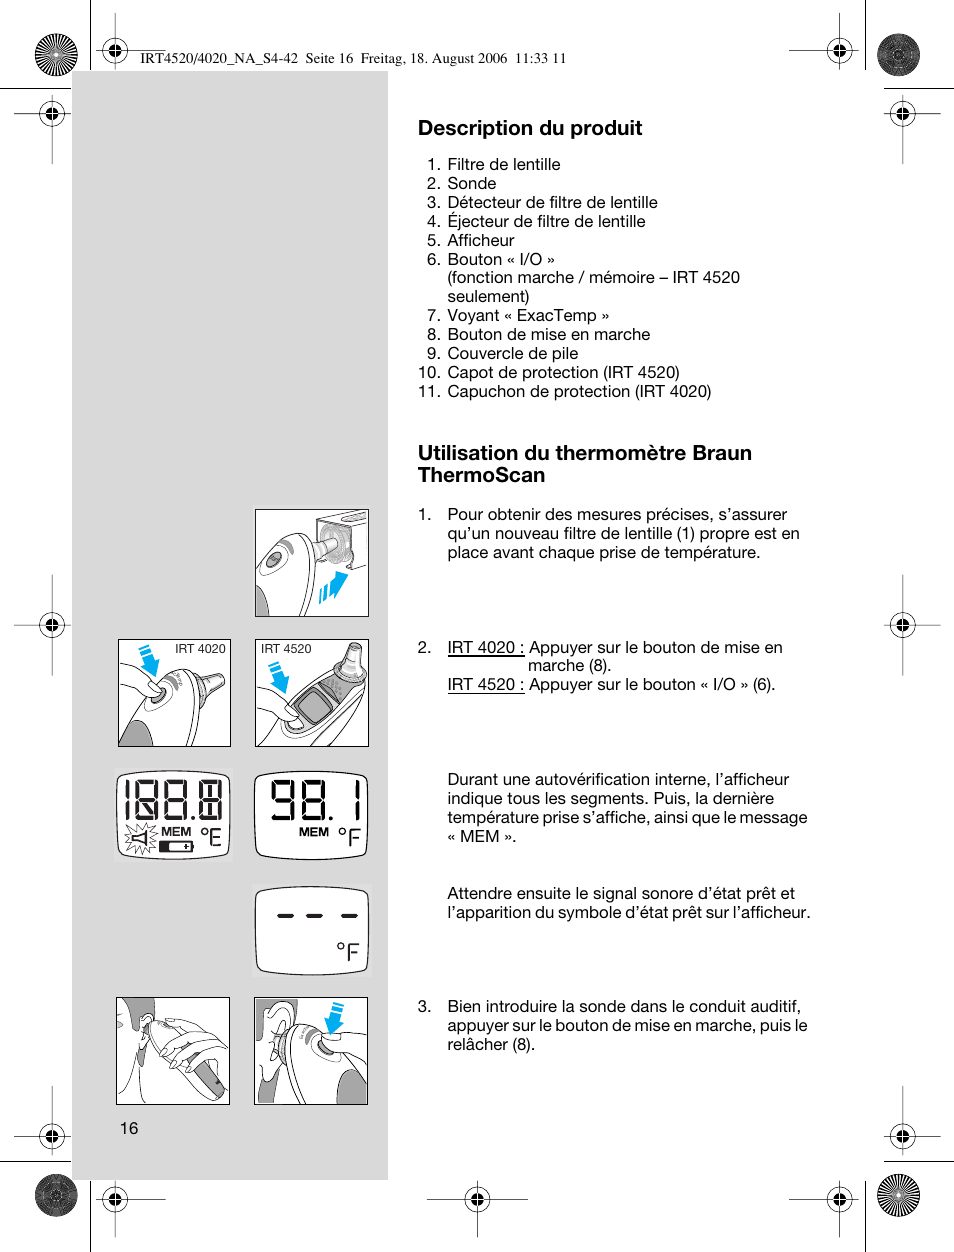 Vermomd vervoer bed Description du produit, Utilisation du thermomètre braun thermoscan | Braun ThermoScan  IRT 4520 User Manual | Page 16 / 42 | Original mode